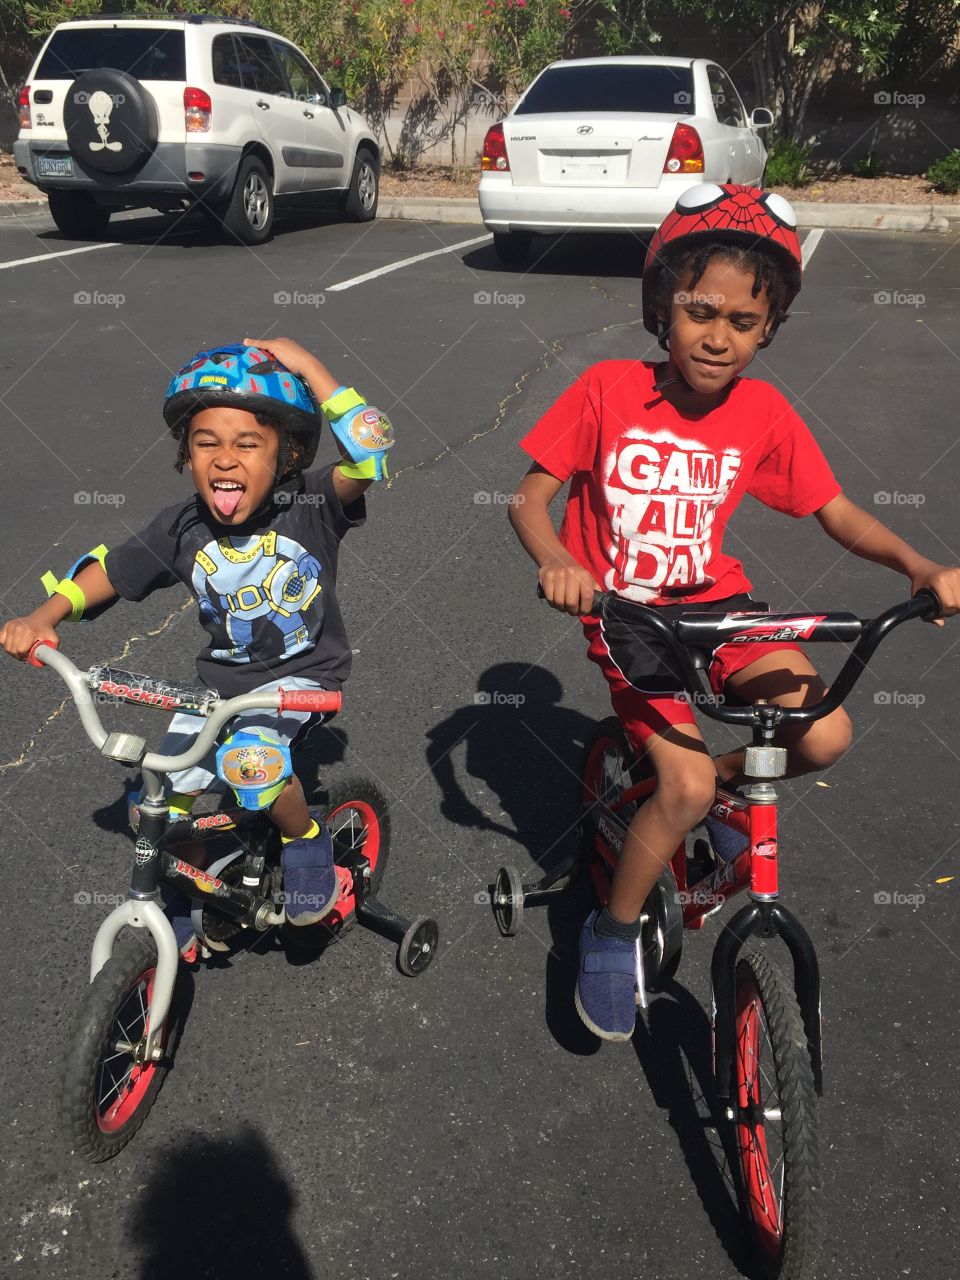 Outdoors kids riding bikes 